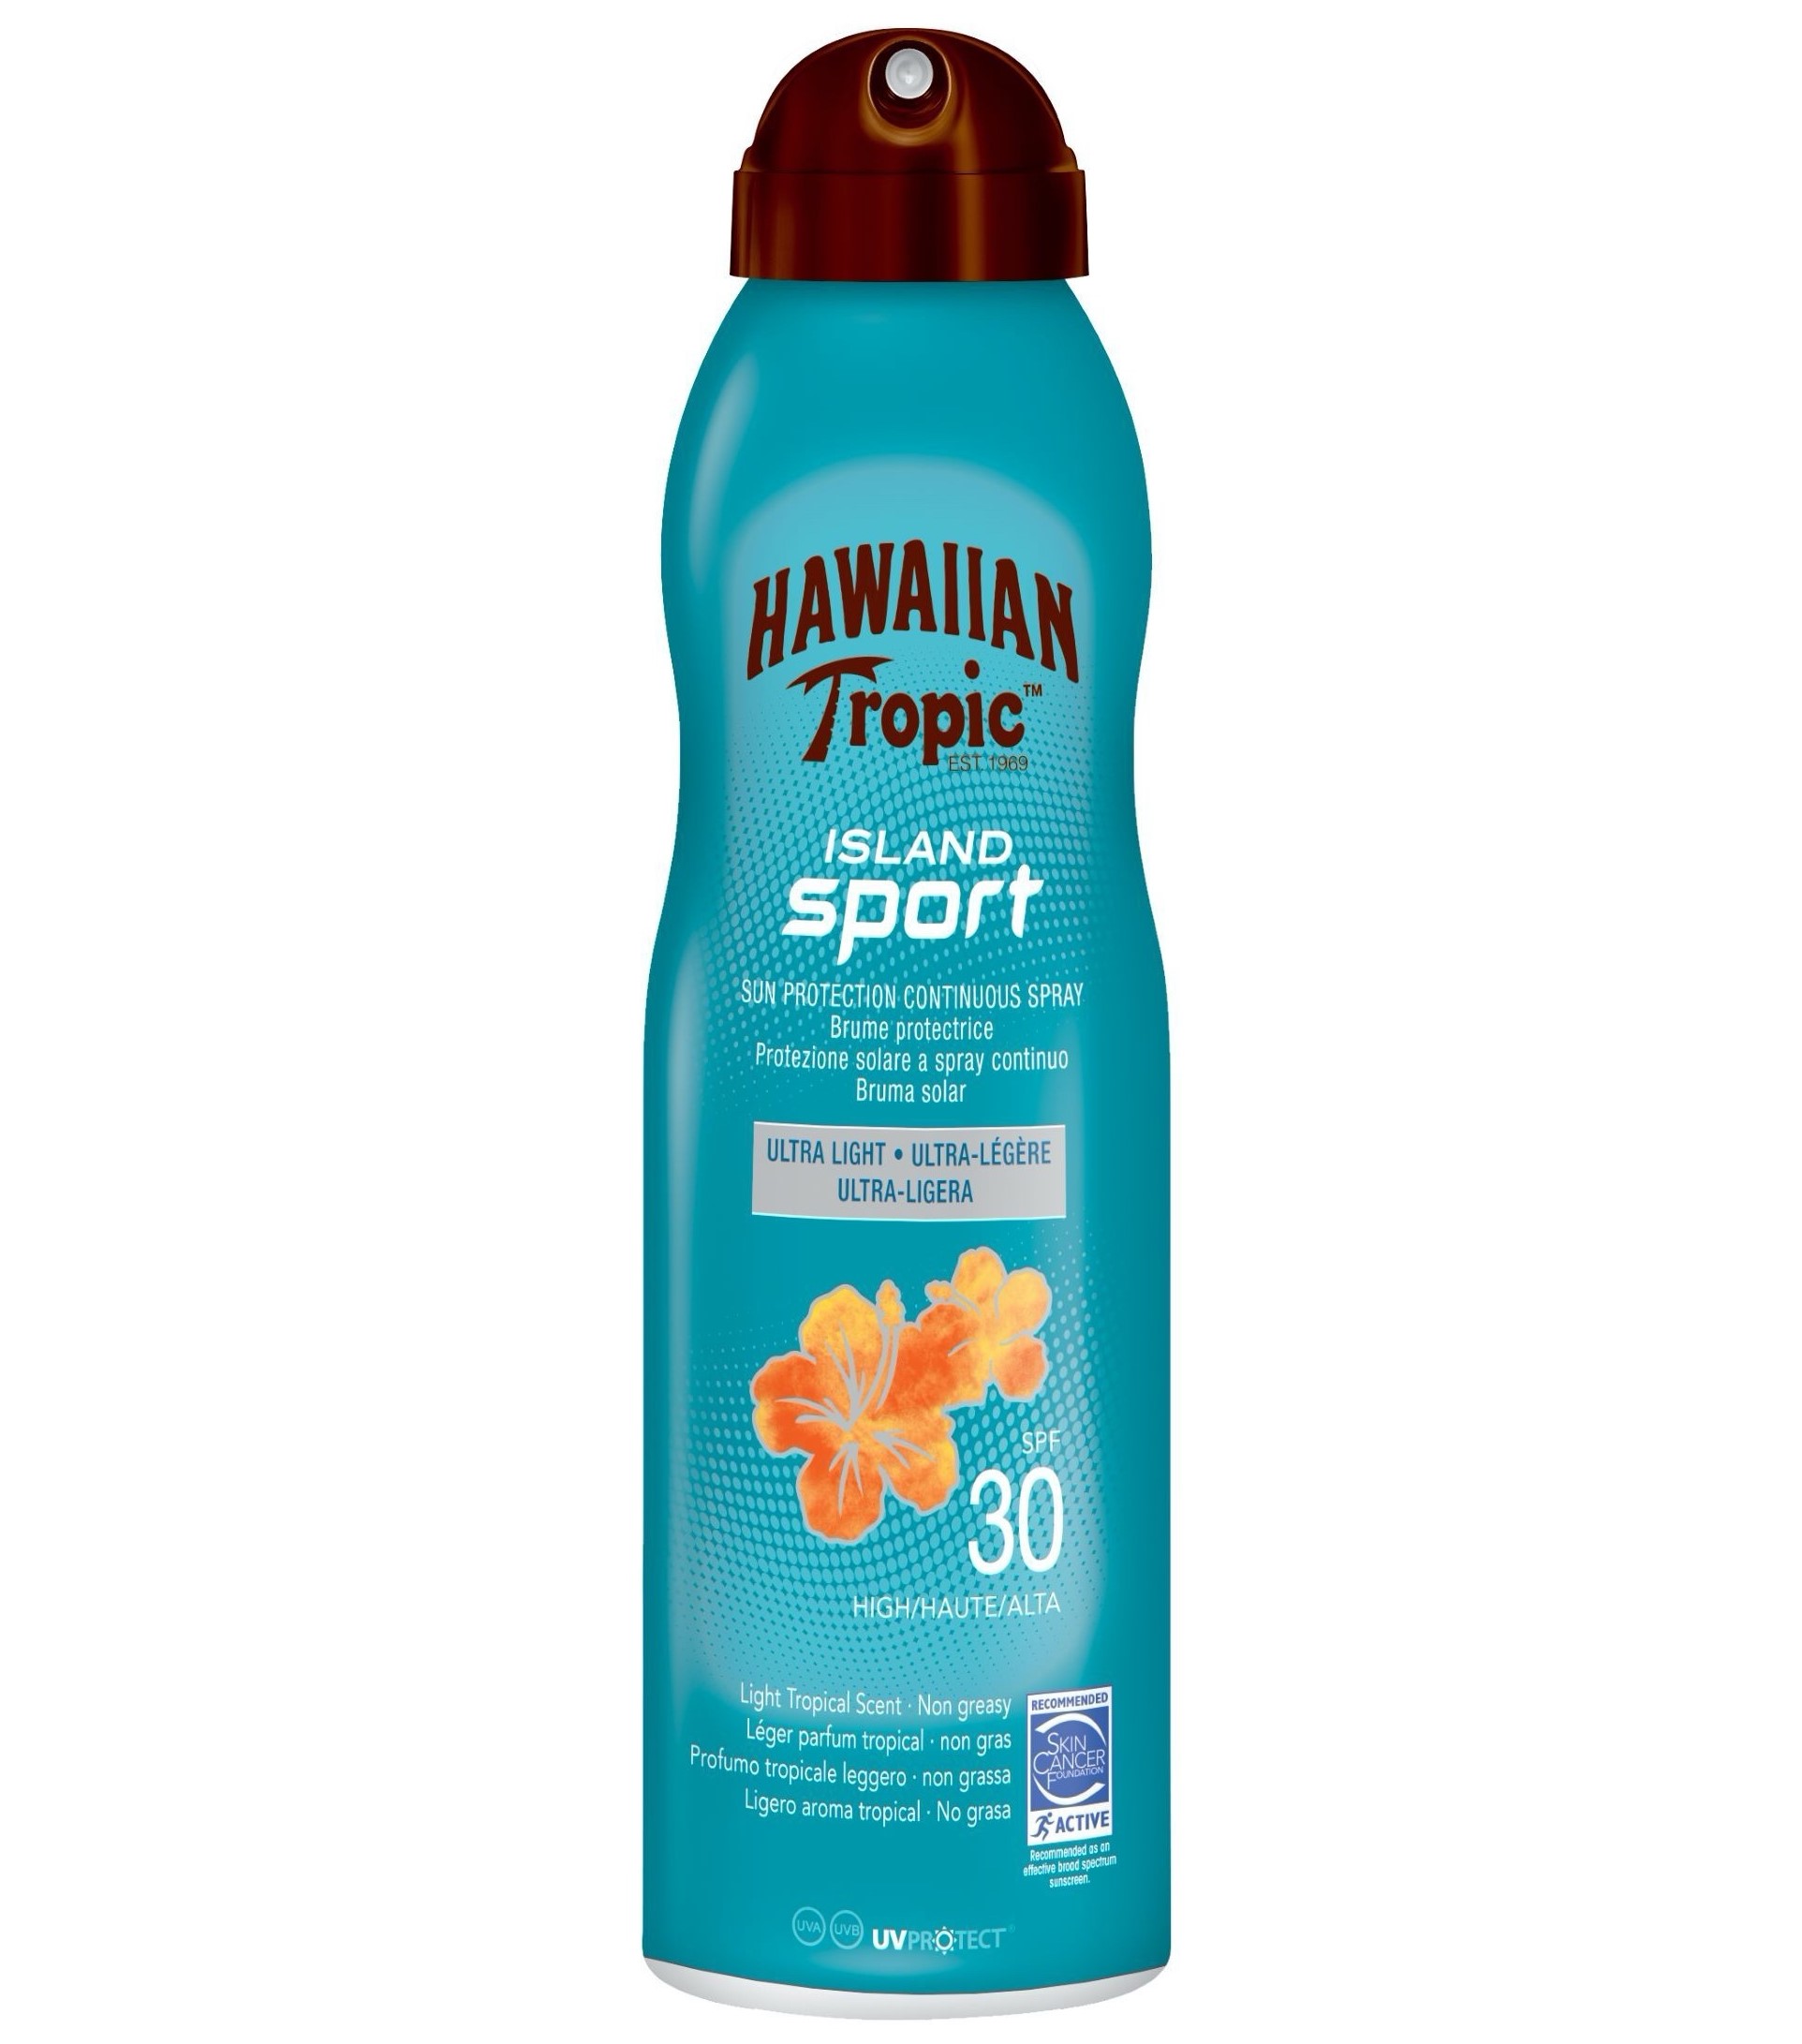 Hawaiian Tropic Island Sport sunscreen